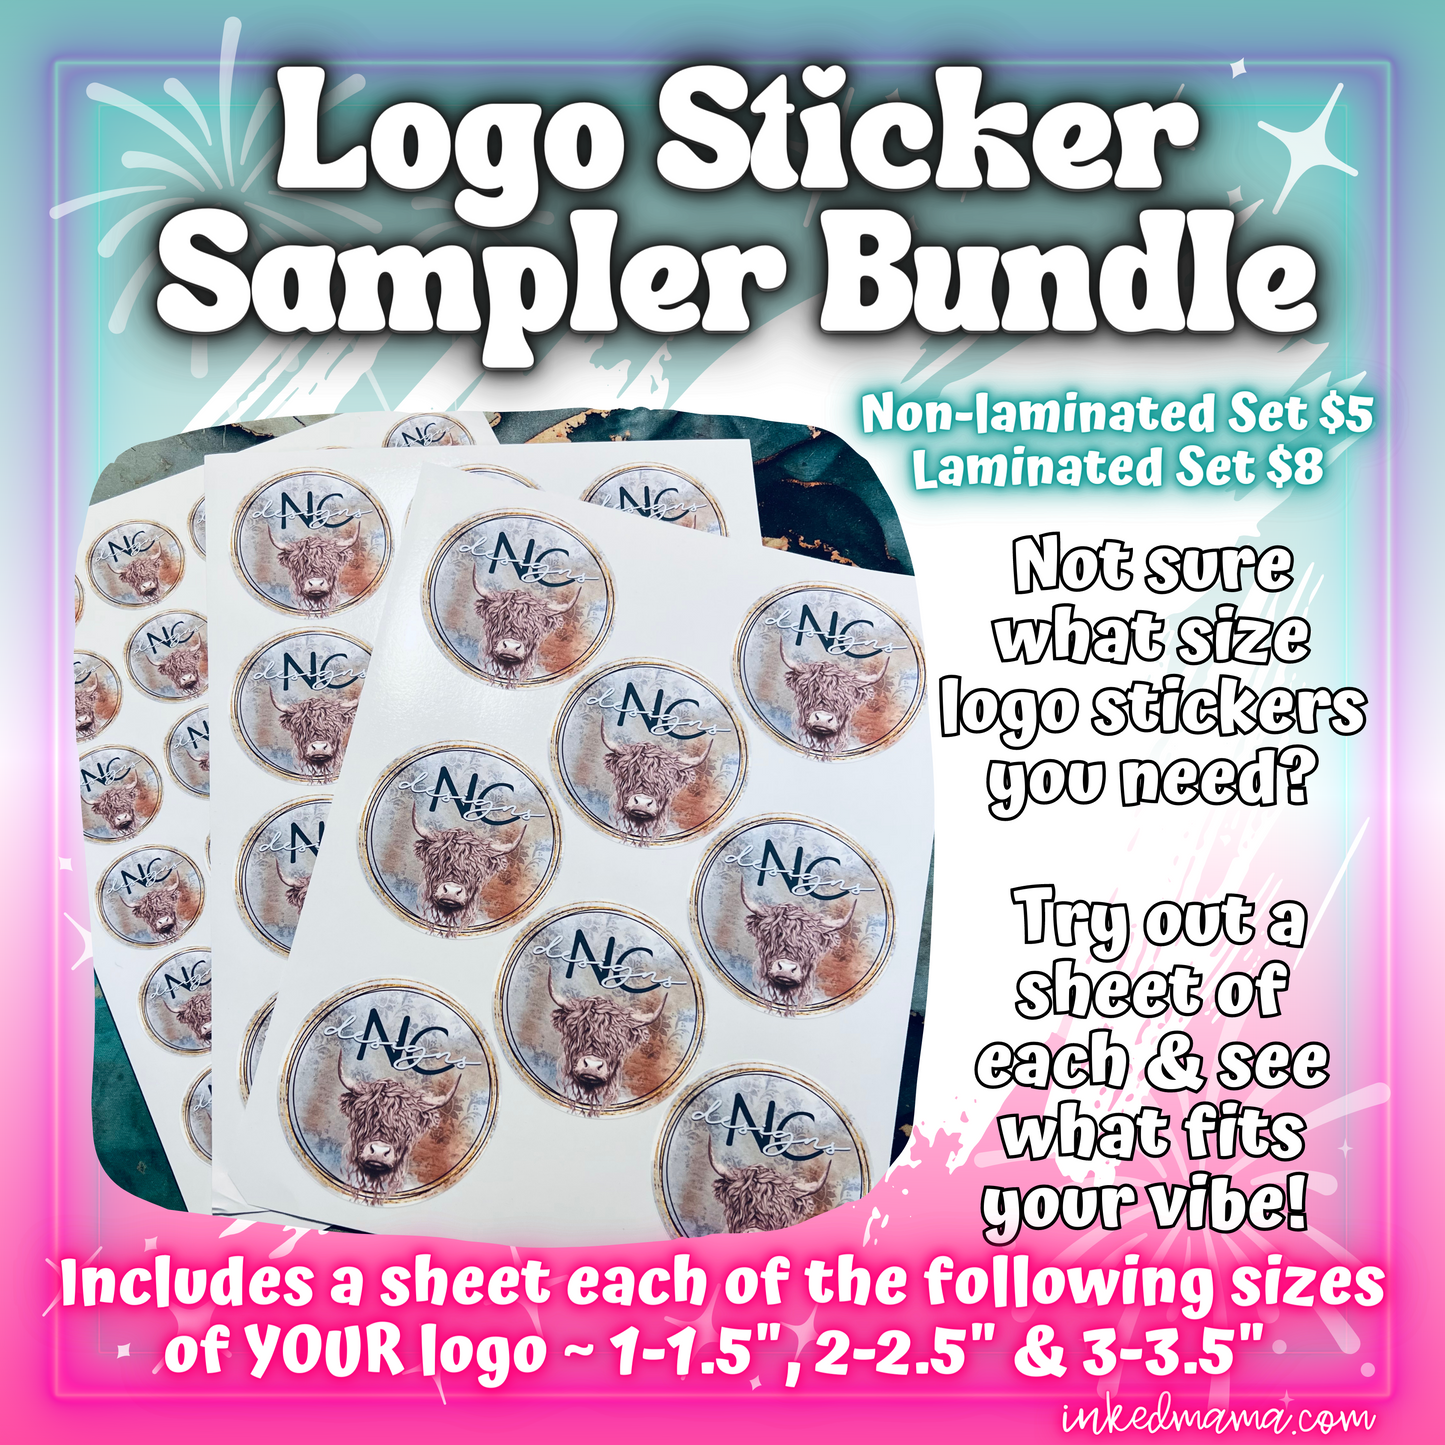 Logo Sticker Sampler Bundle - Small Business Full Color Printed Vinyl Stickers